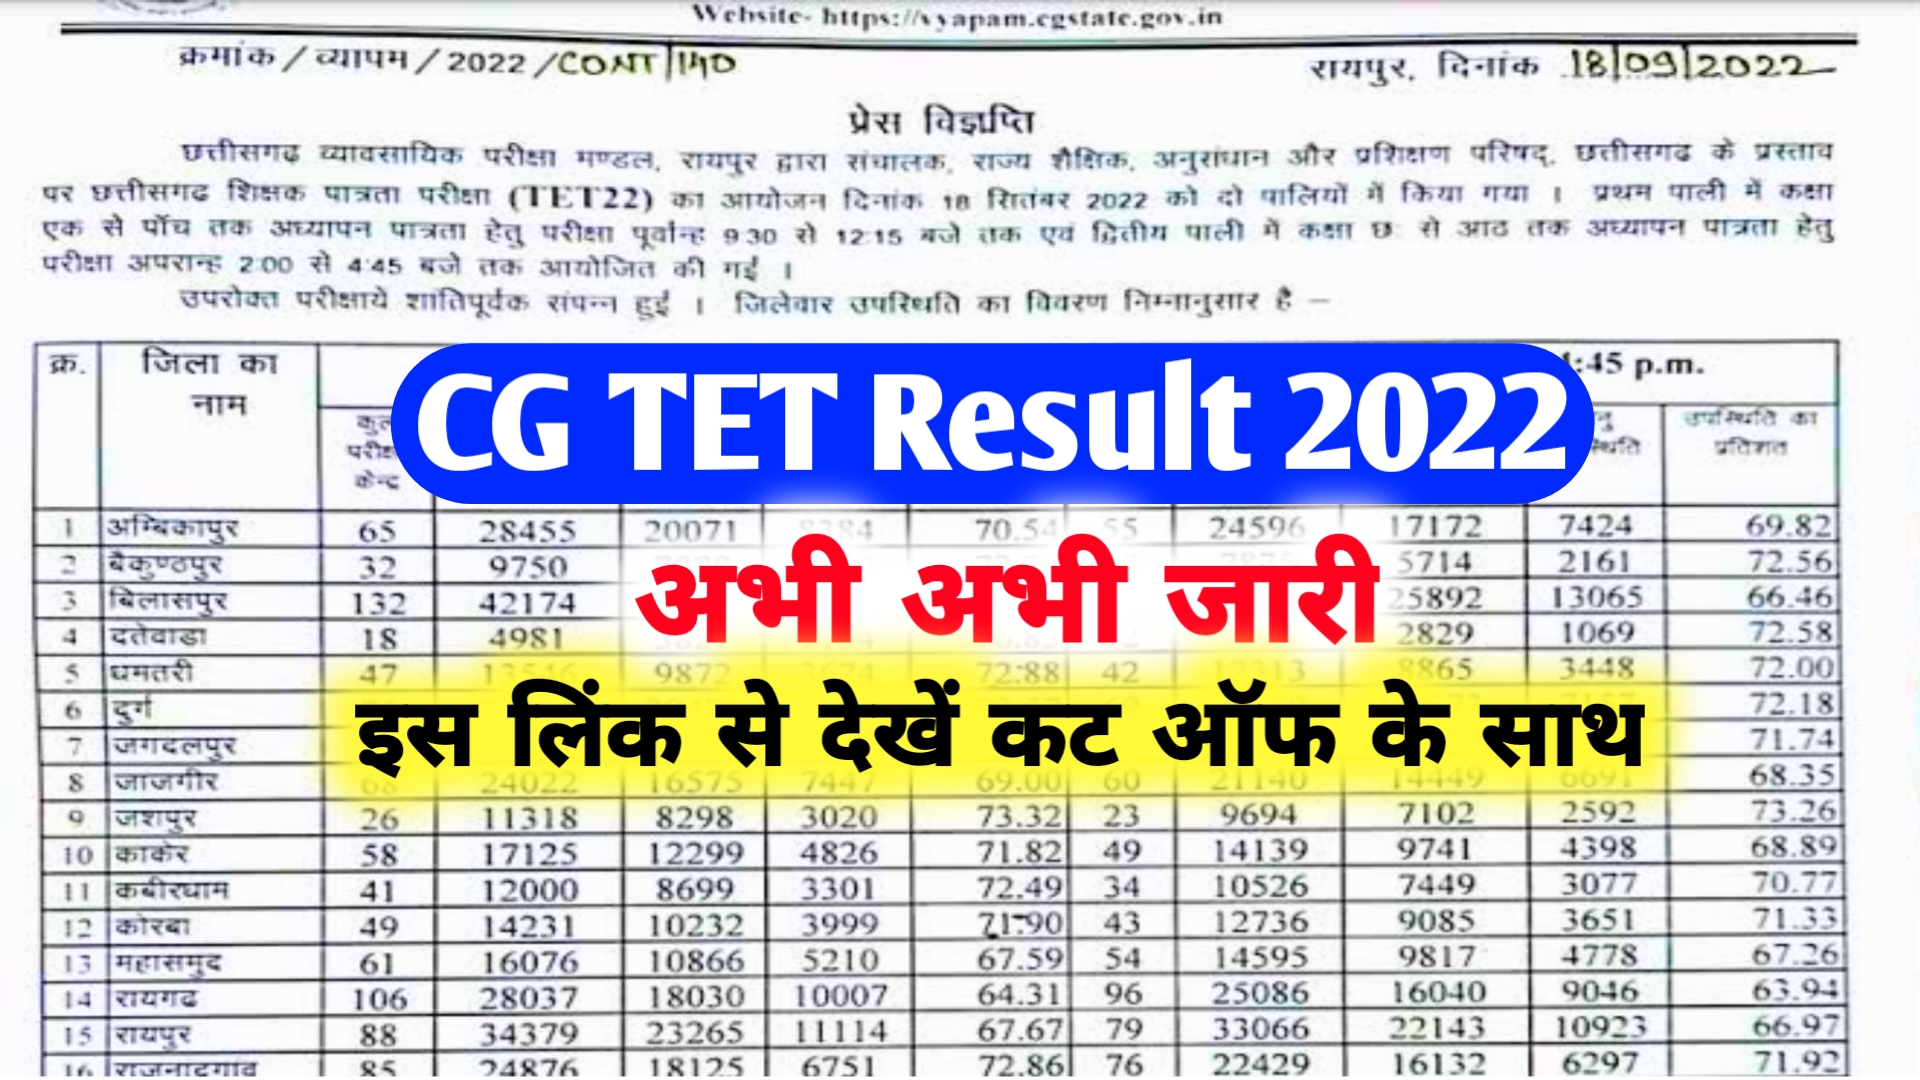 CG TET Result 2022 Direct Link ~ @vyapam.cgstate.gov.in TET Merit List